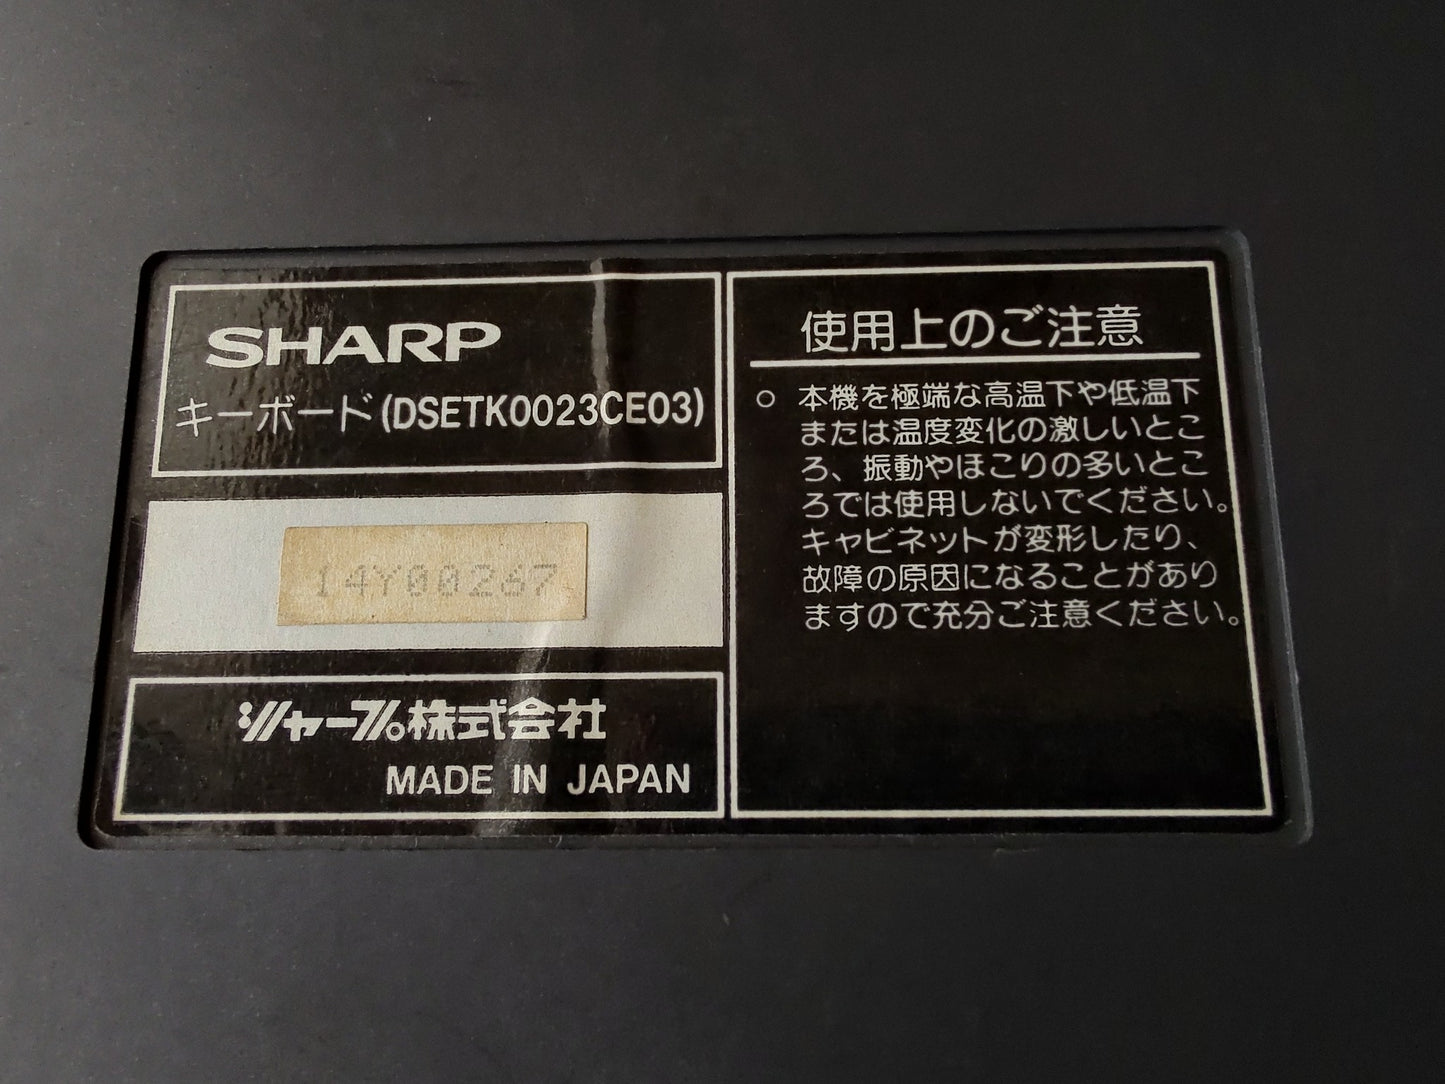 SHARP X68000 Original KEYBOARD DSETK0023CE03, Working-f0616-